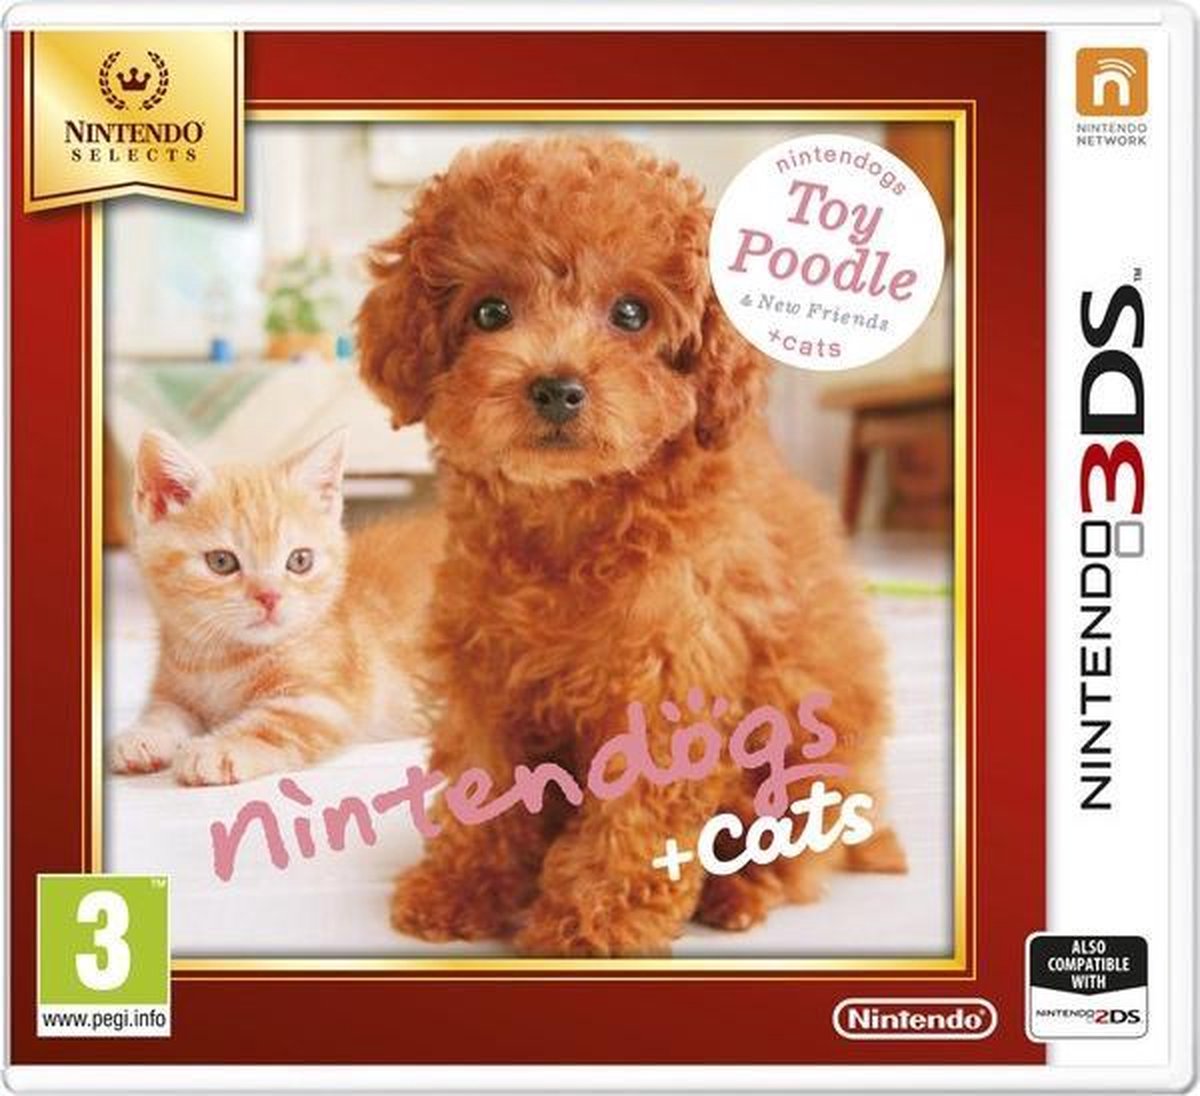 Nintendogs + Cats: Toy Poodle & New Friends - Nintendo Selects (3DS) EUR - Nintendo